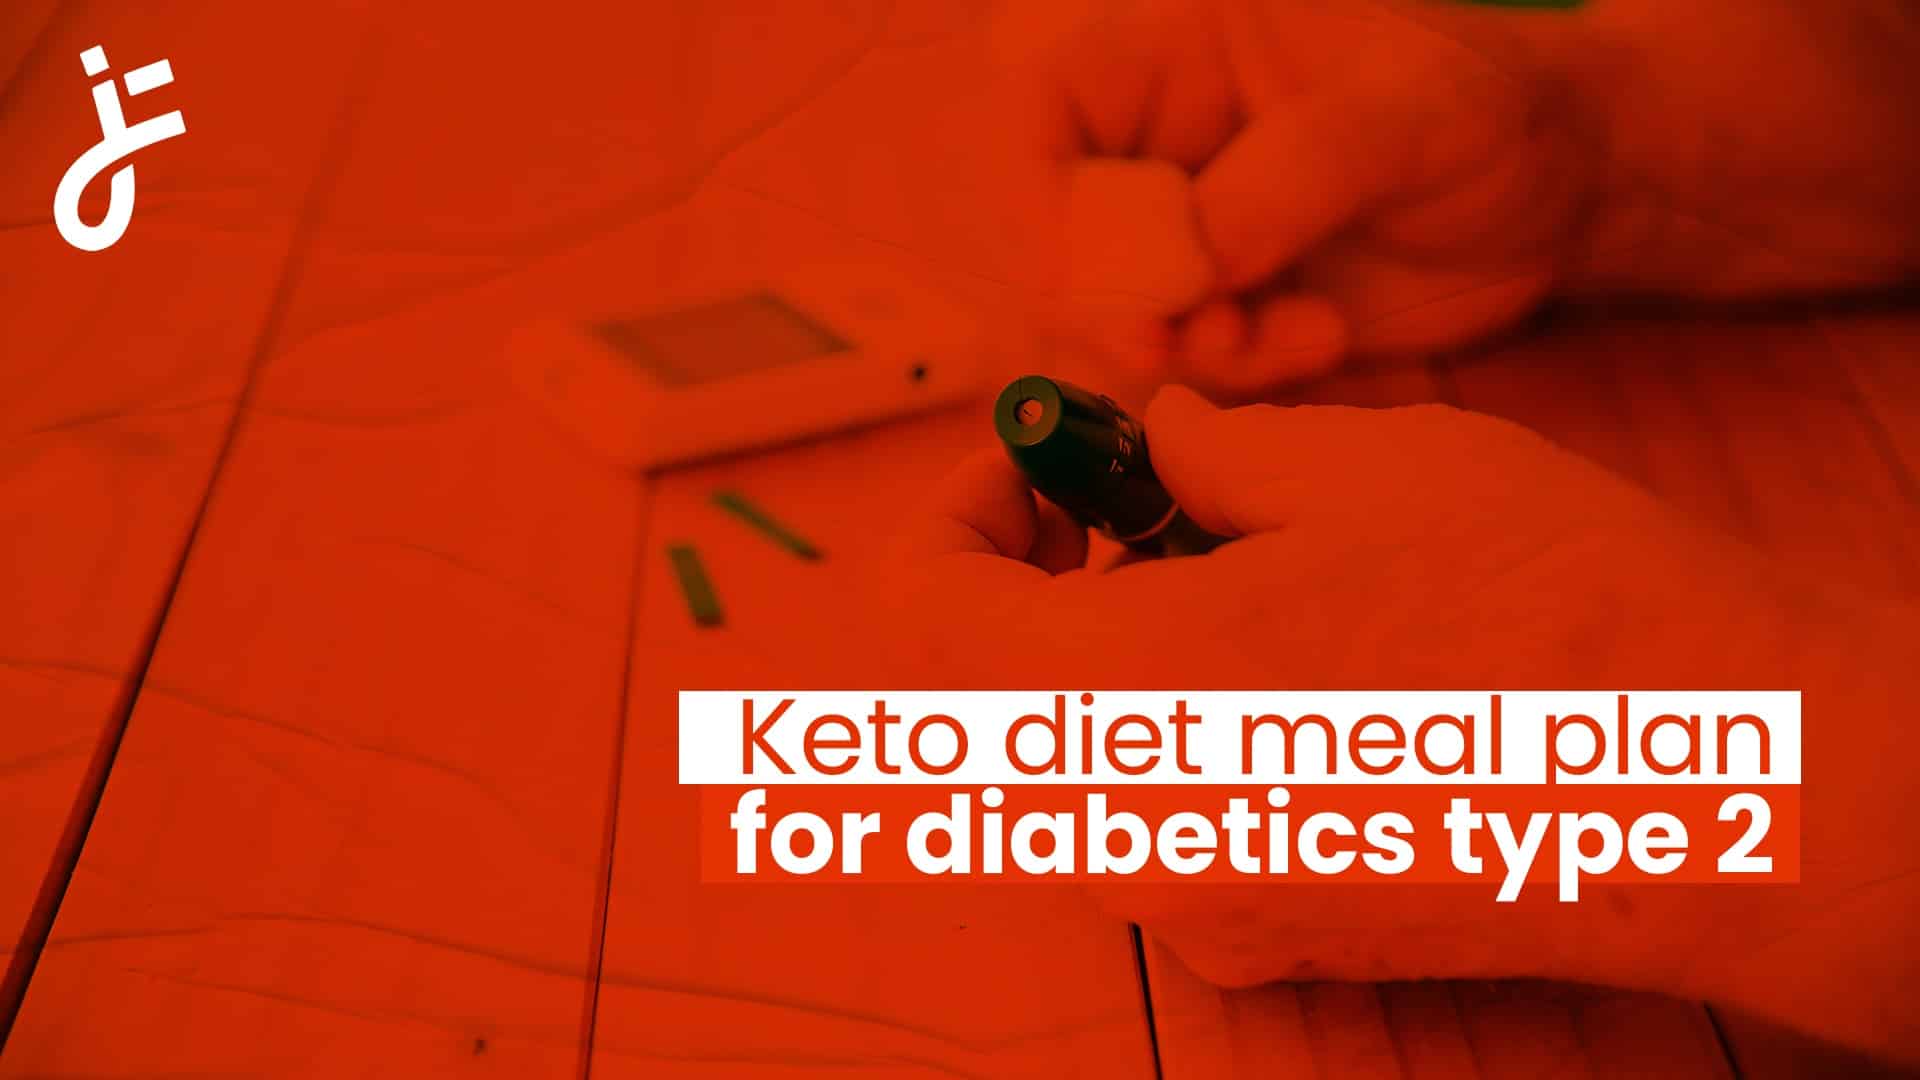 Keto diet meal plan for diabetics type 2